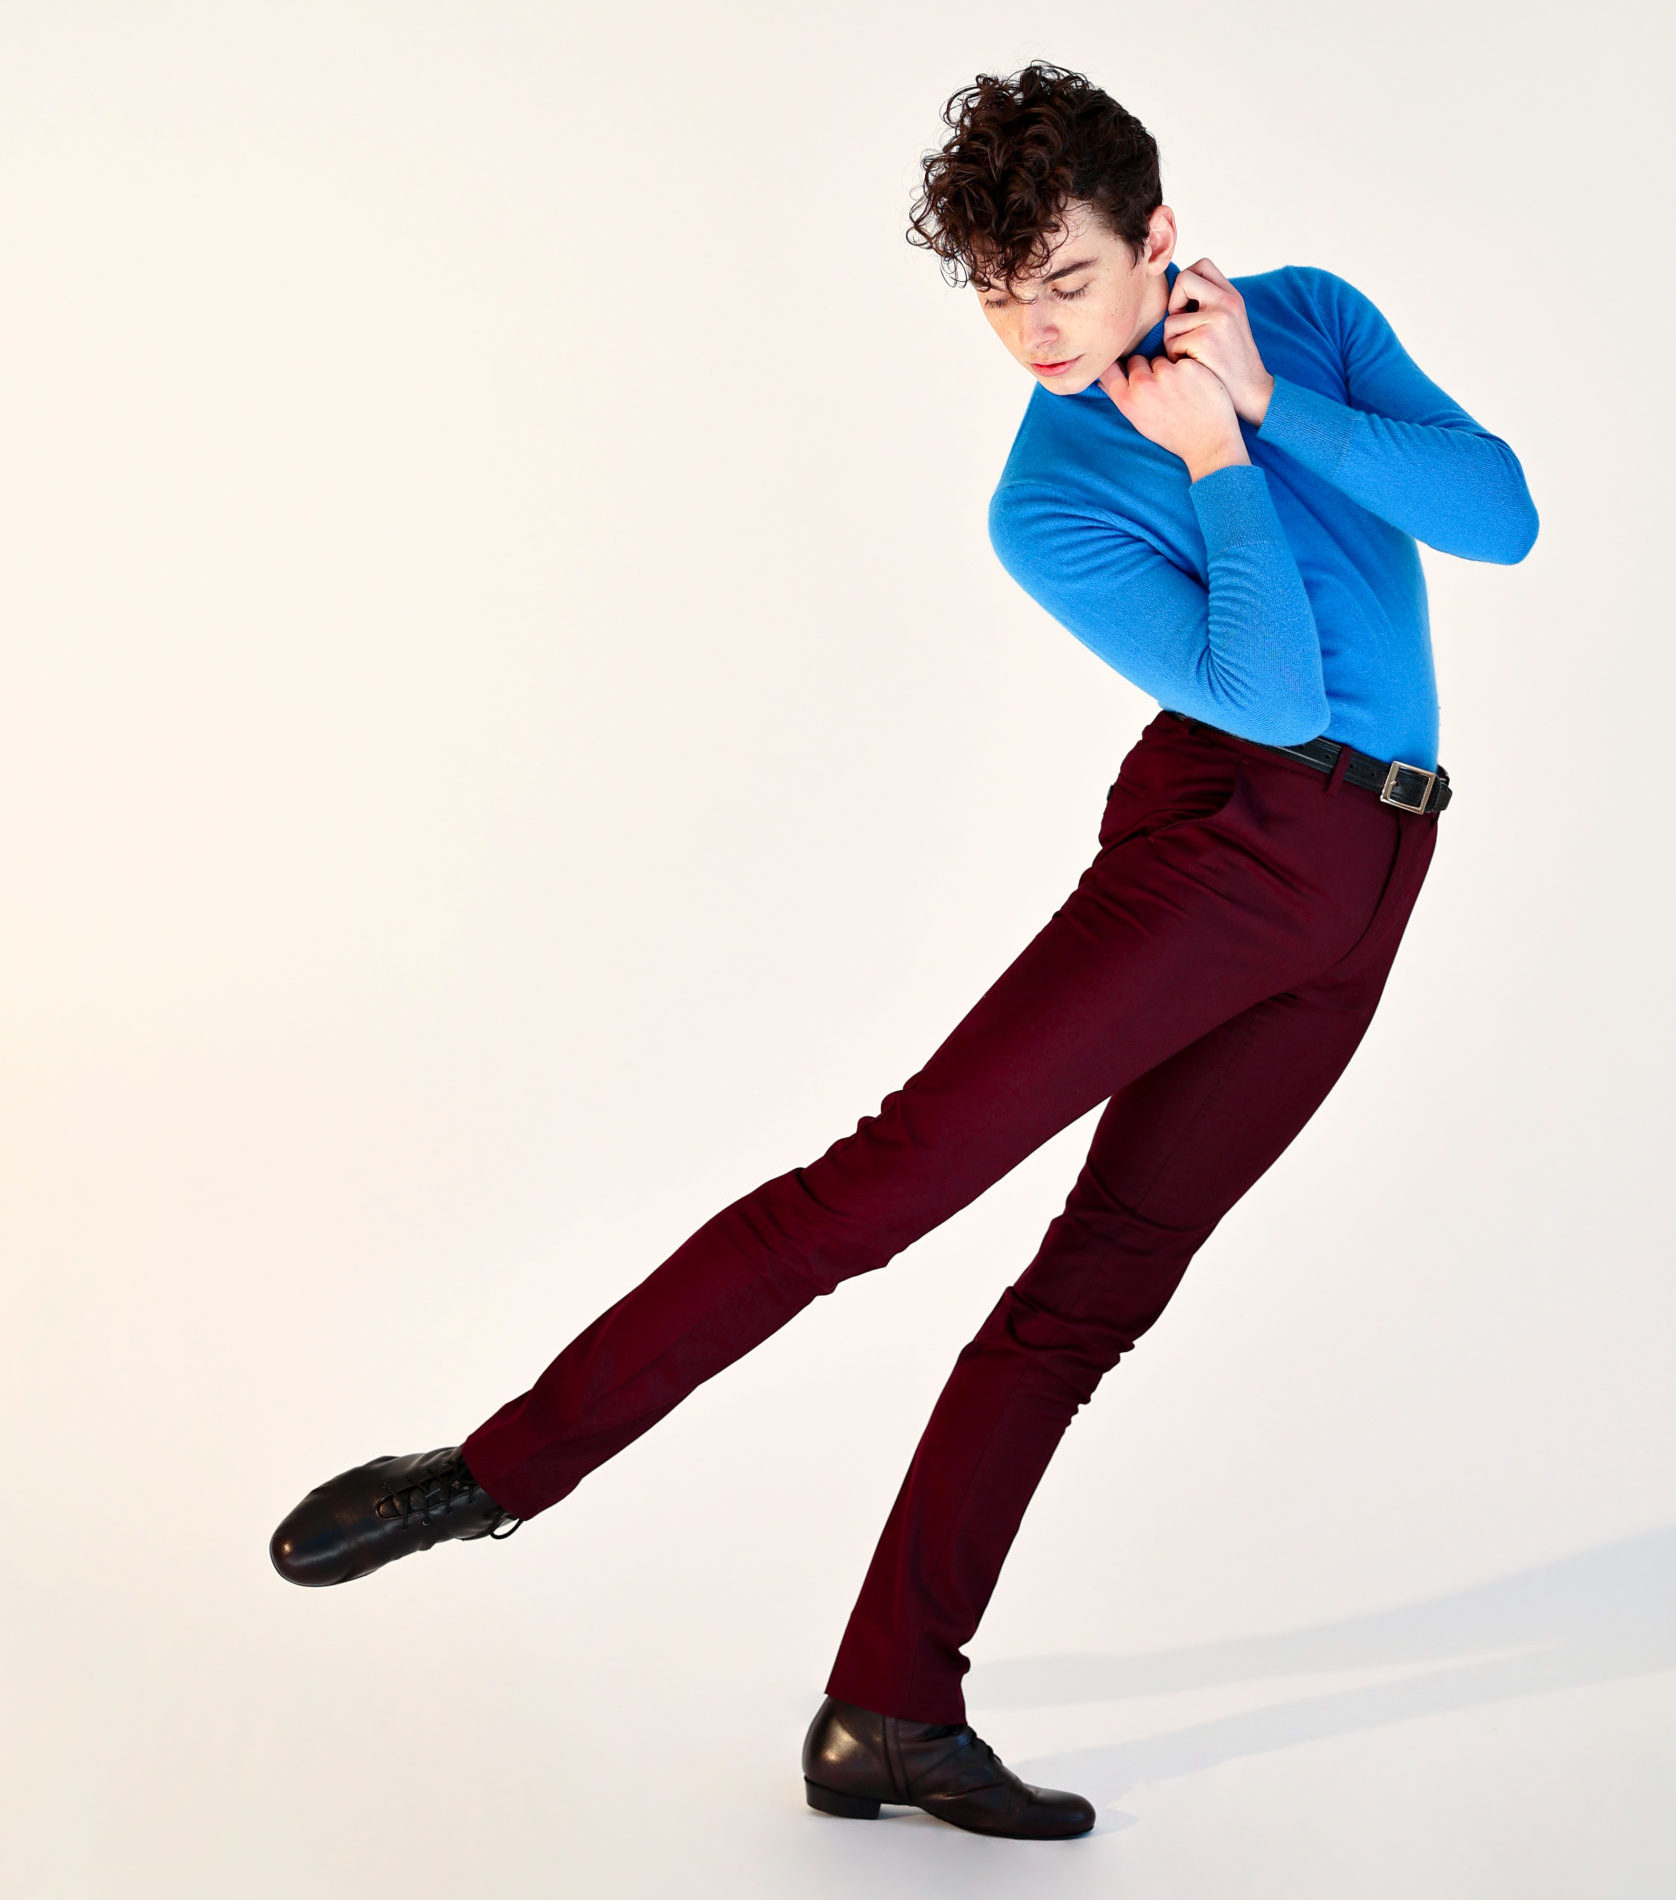 dancer wearing blue shirt and black pants